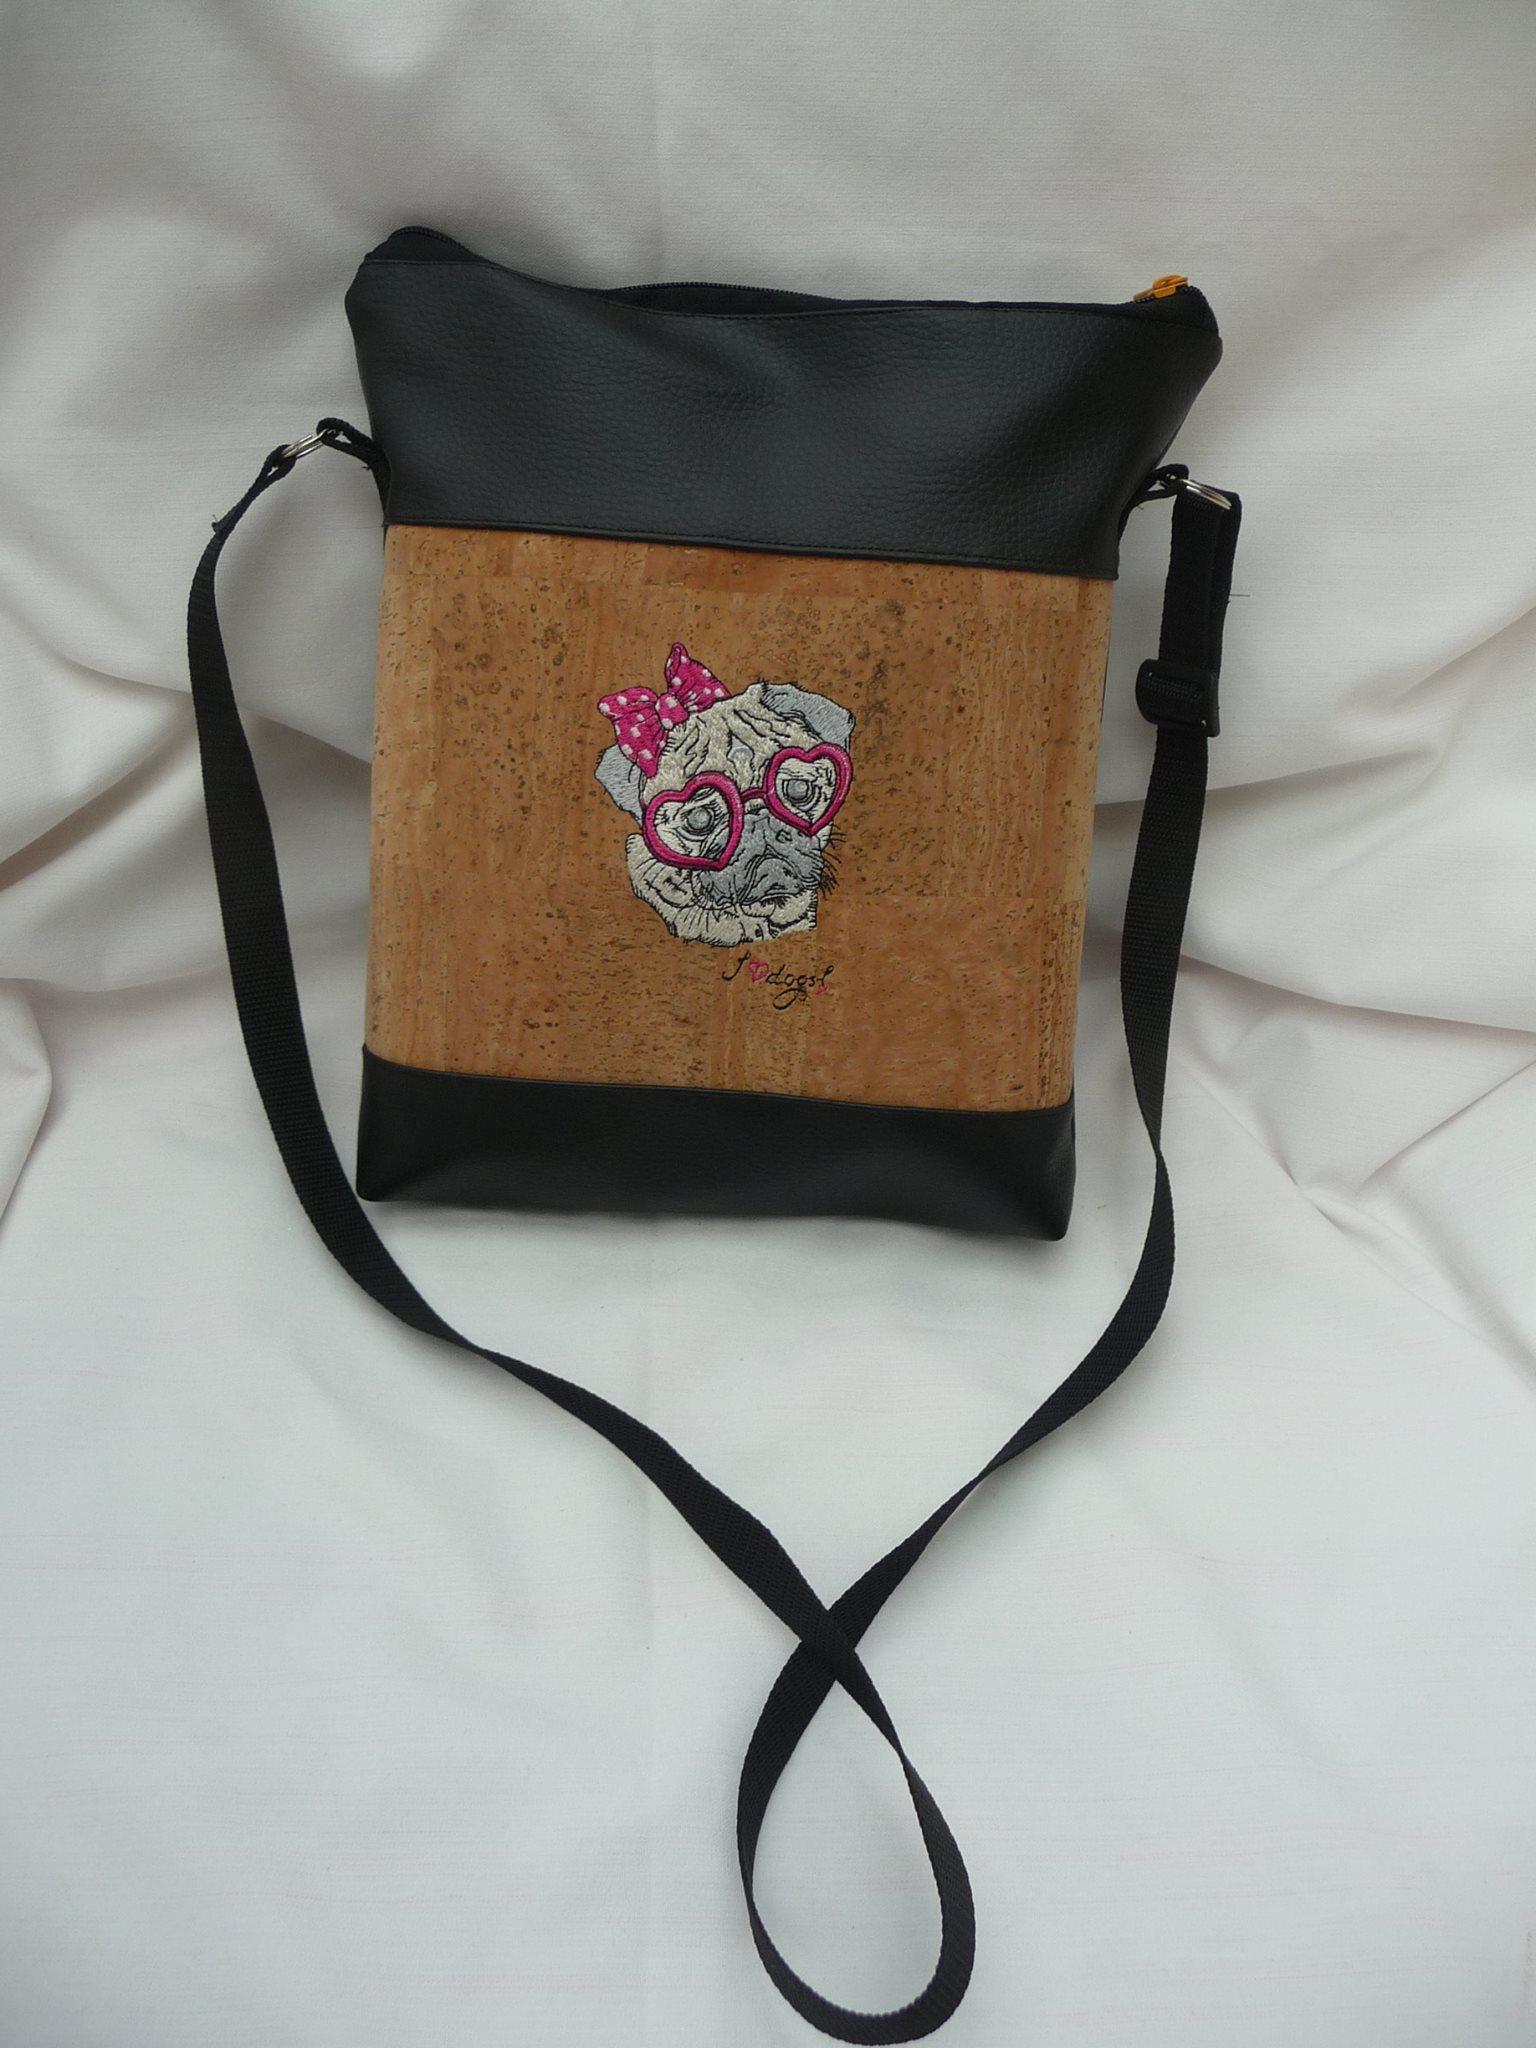 Hand bag with Posh pug dog machine embroidery design